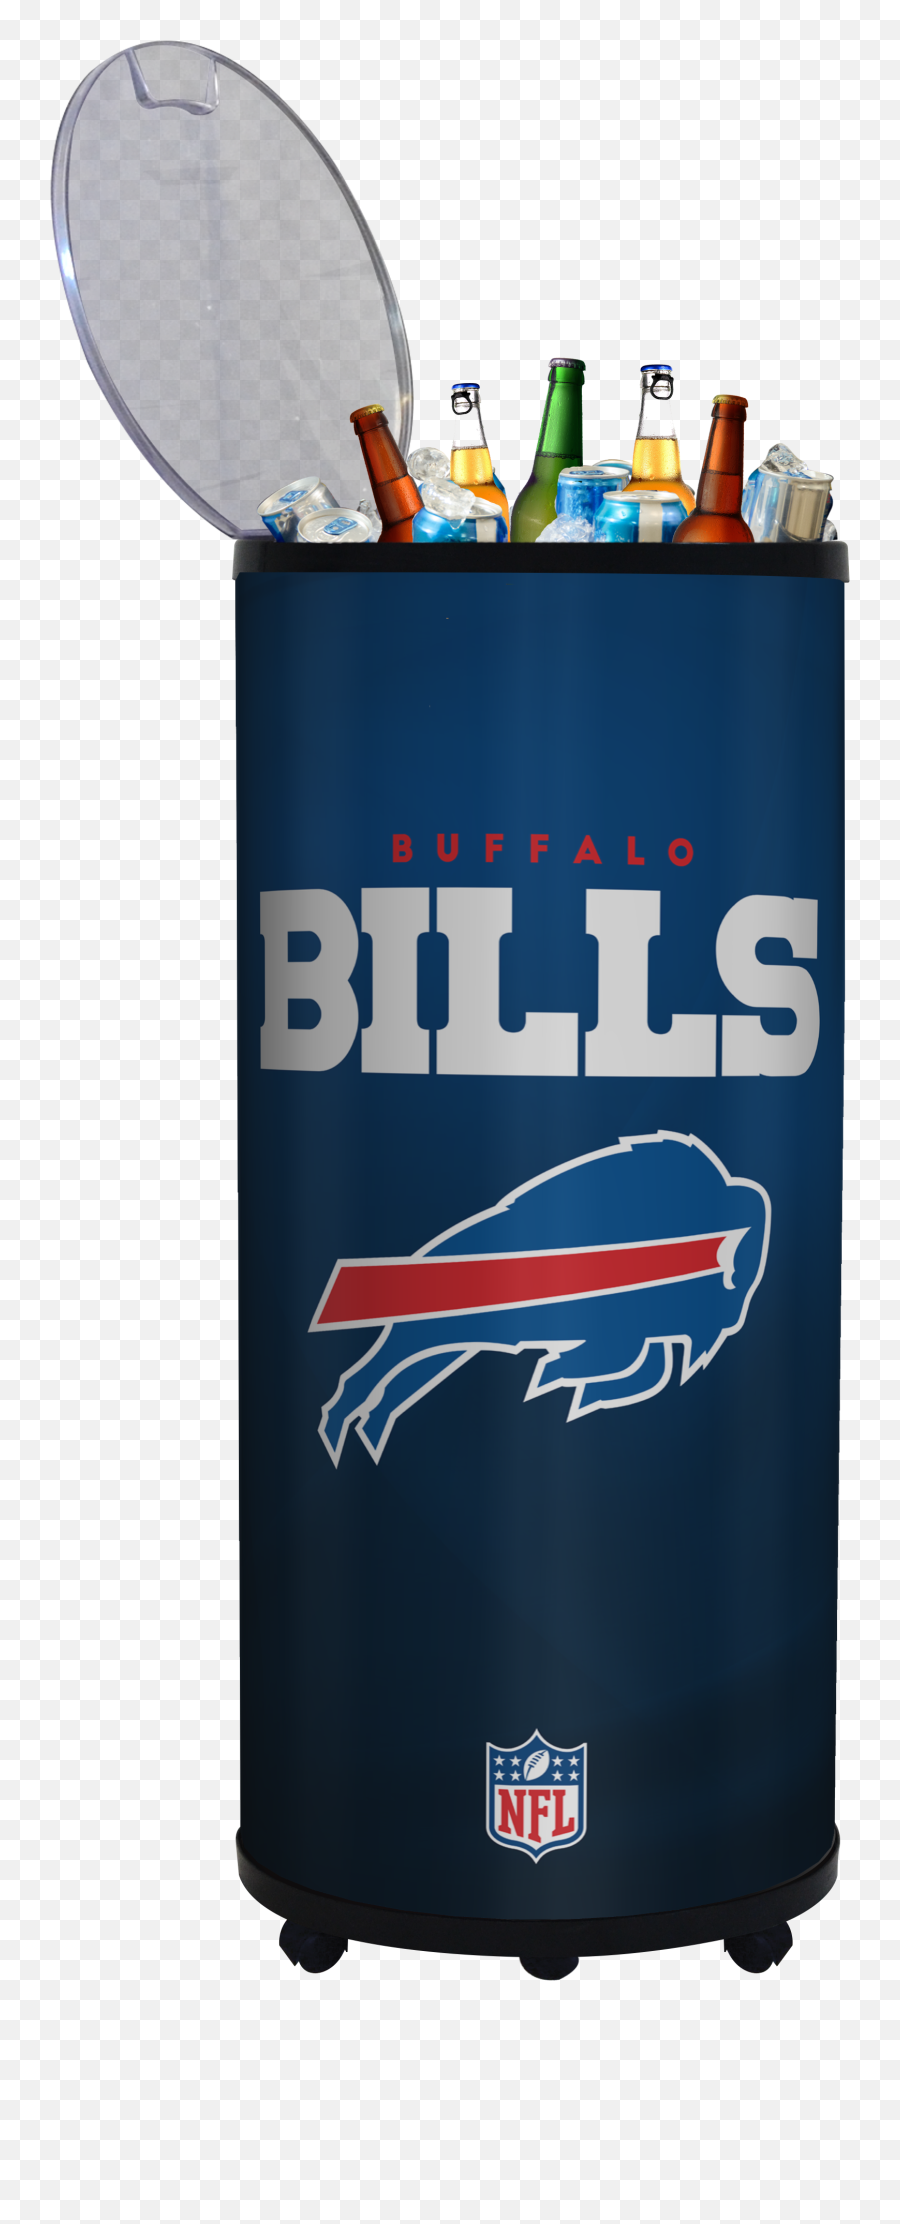 Download Hd Buffalo Bills 17 X 40 Beverage Ice Barrel - Buffalo Bills Png,Buffalo Bills Png